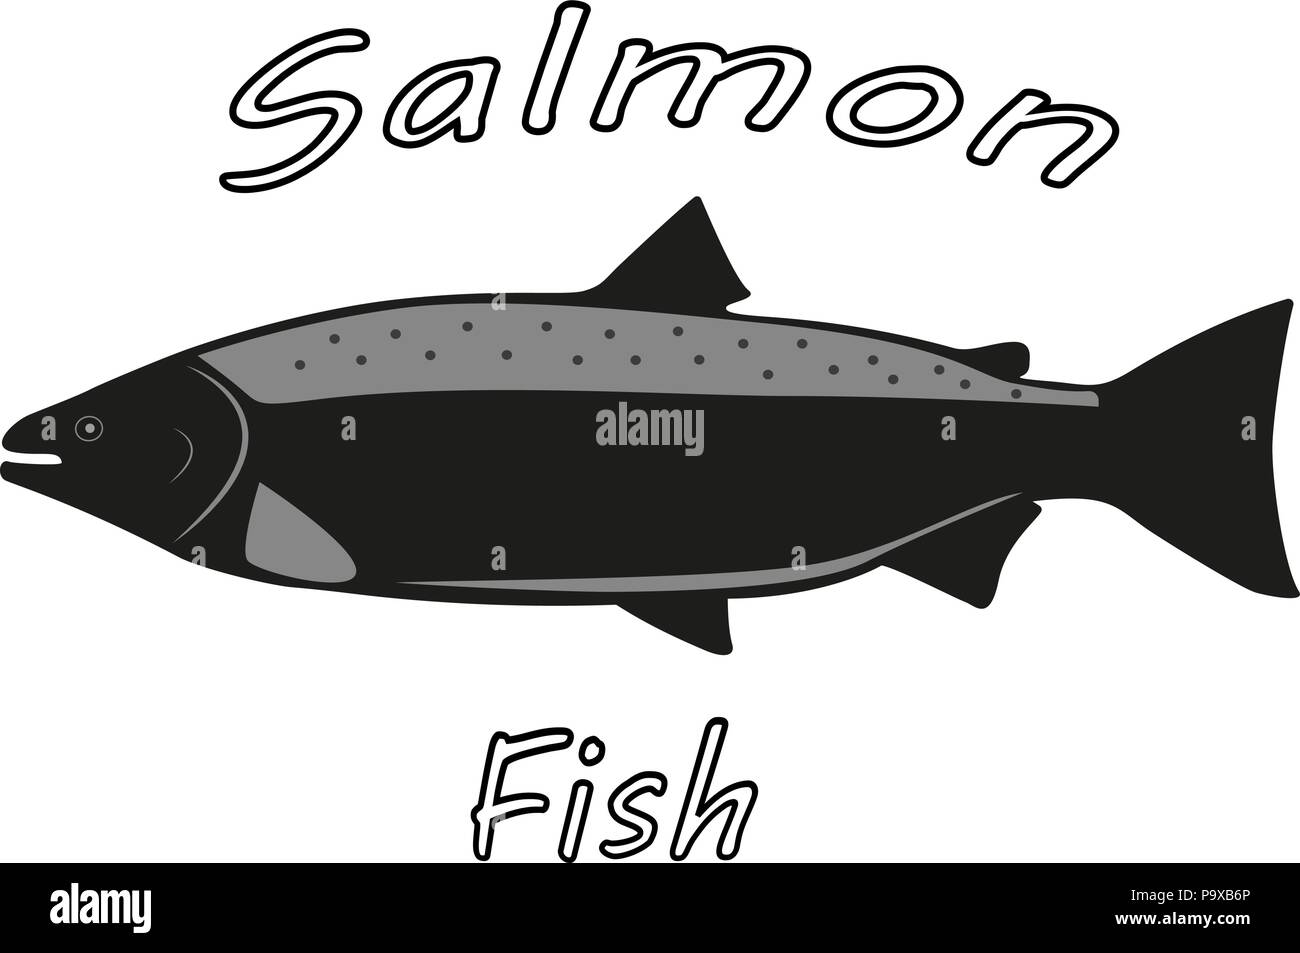 Vector illustration of a salmon fish Stock Vector